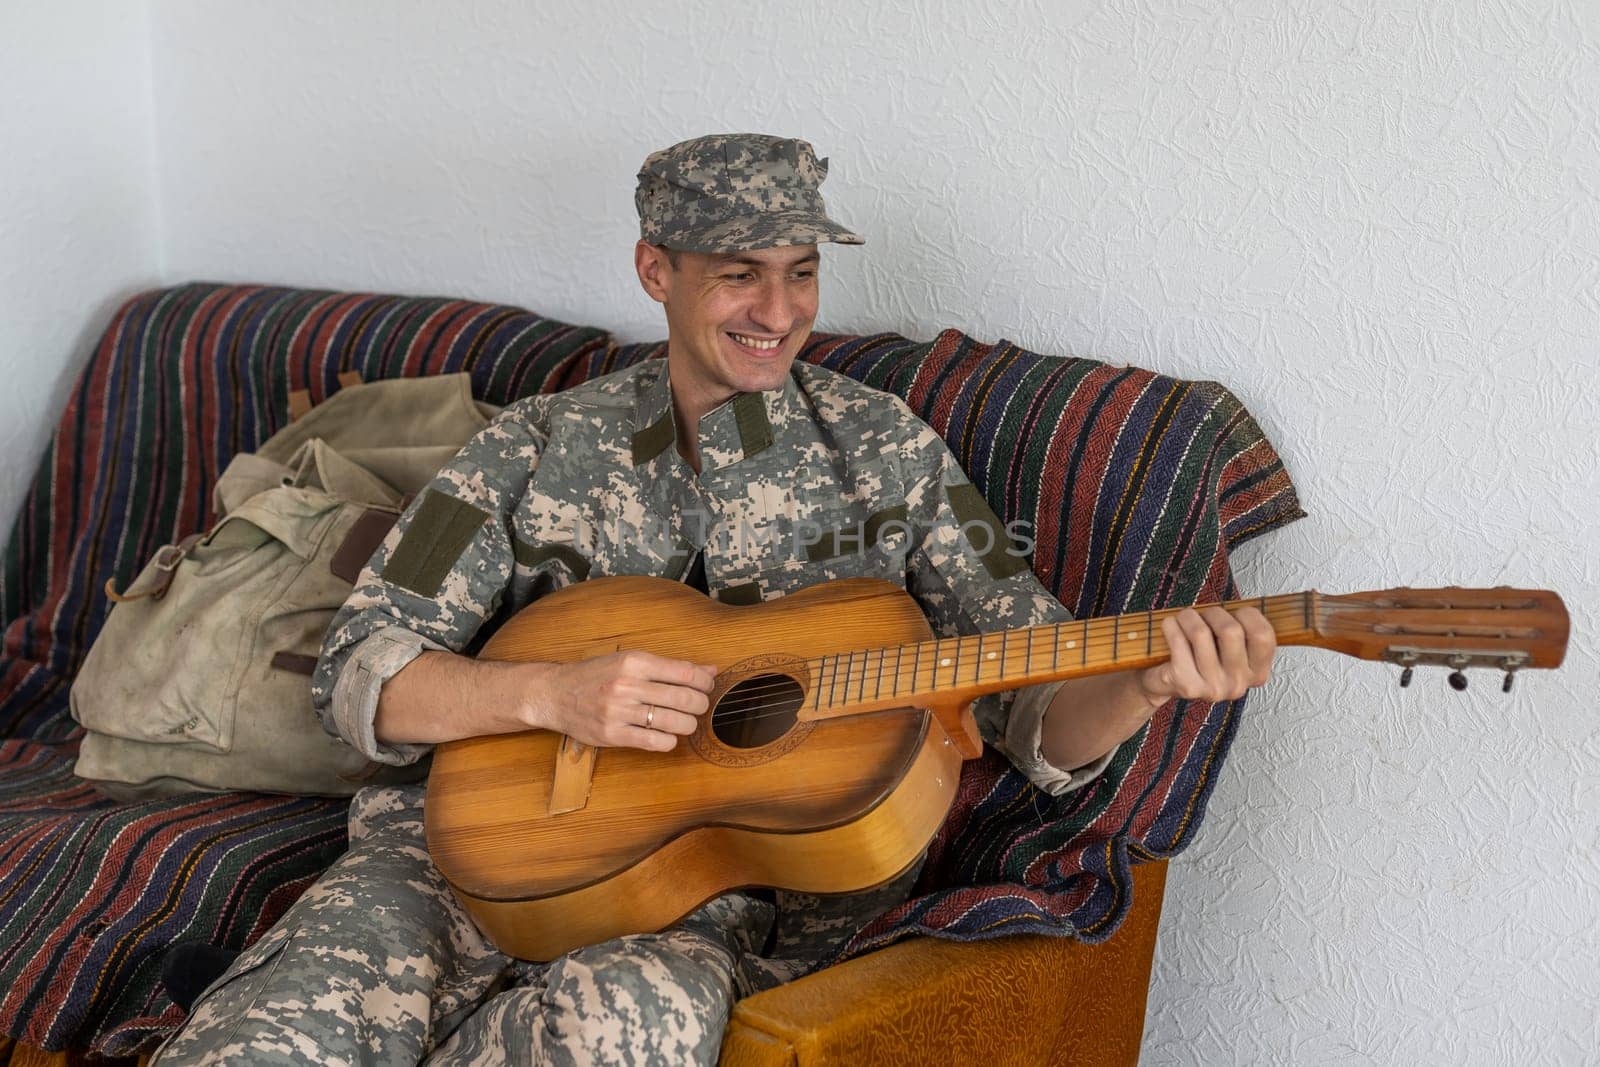 Cheerful smiling young military man wearing khaki uniform holding guitar